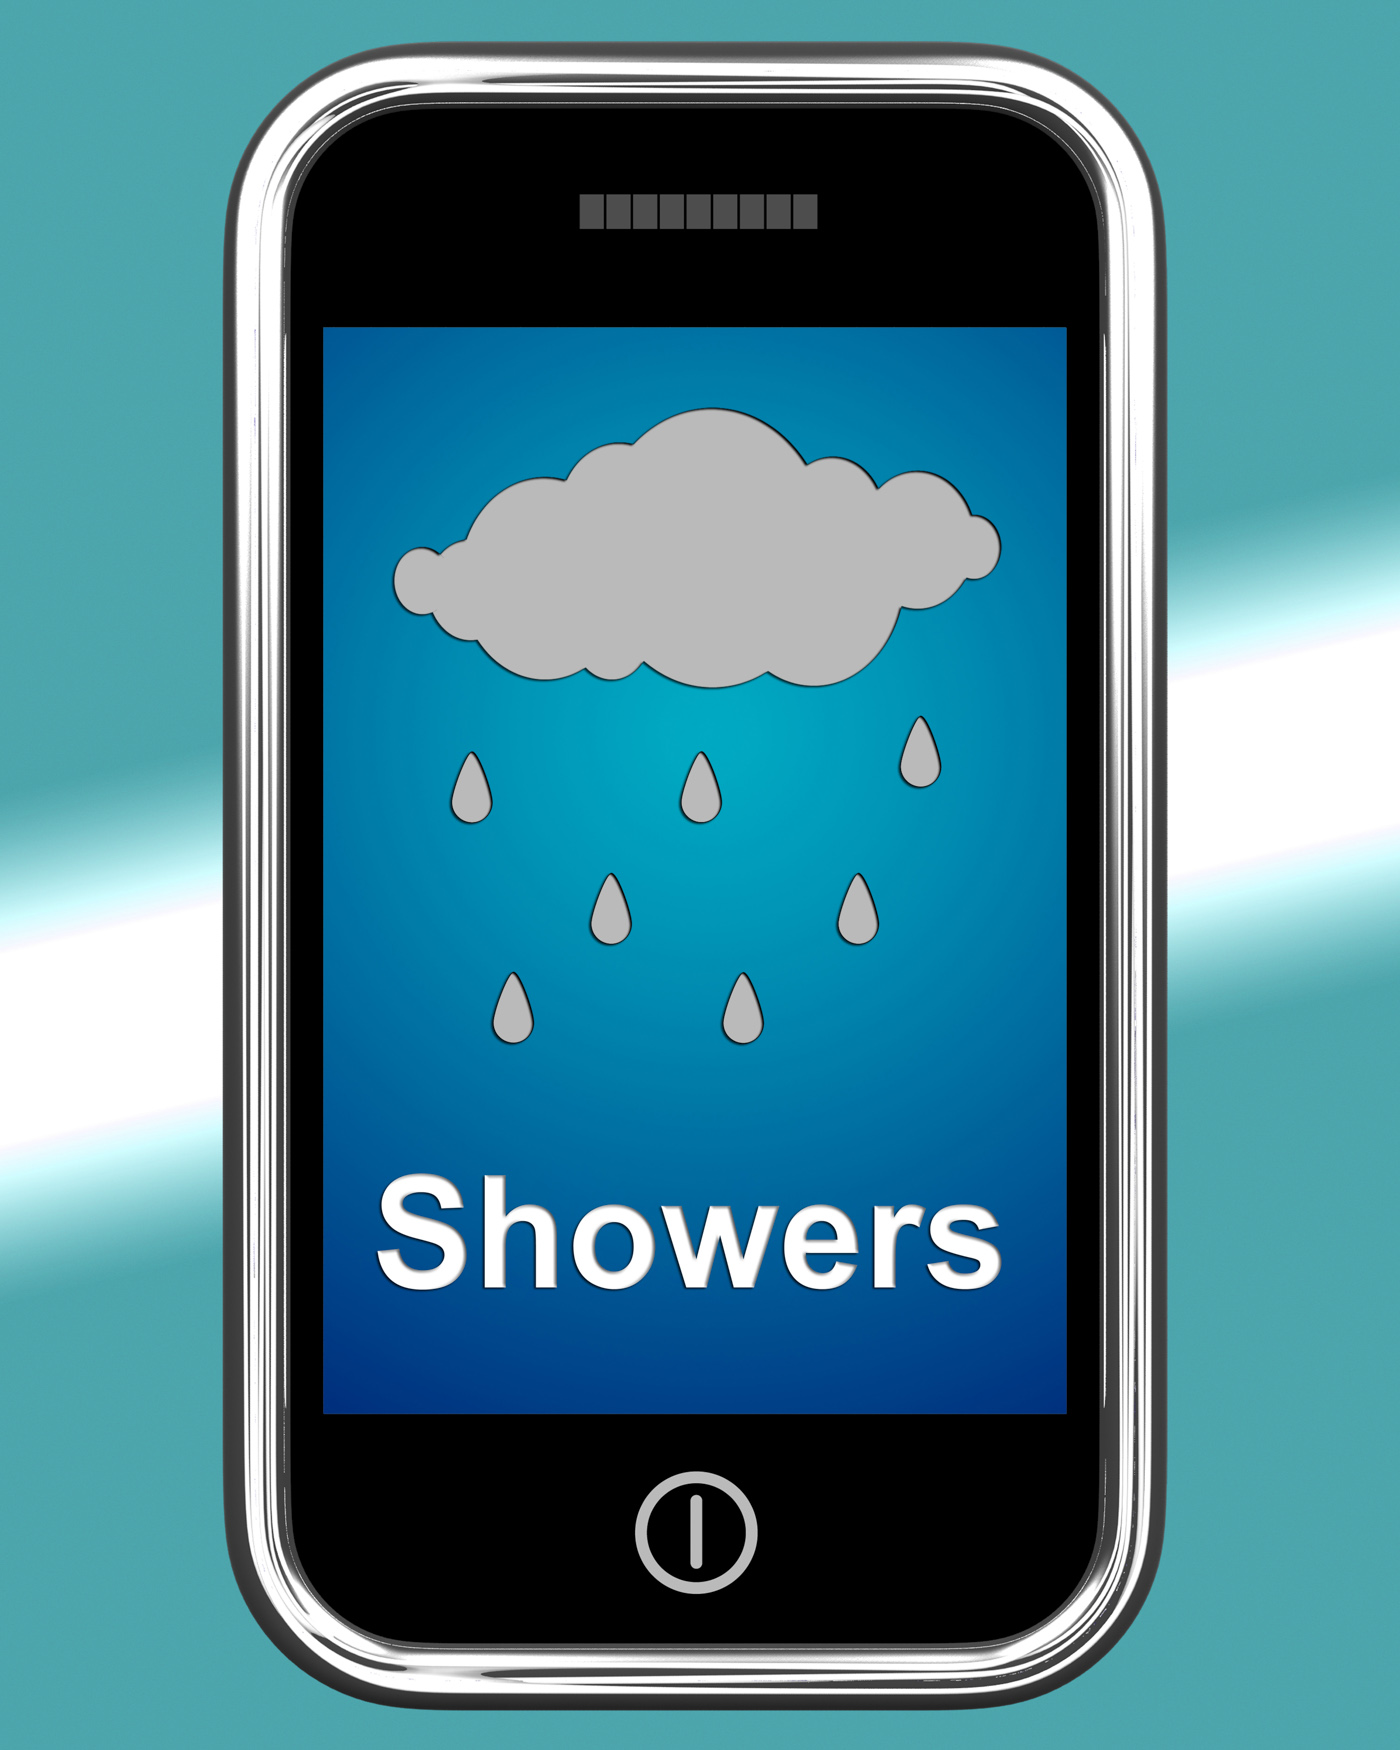 Showers on phone means rain rainy weather photo